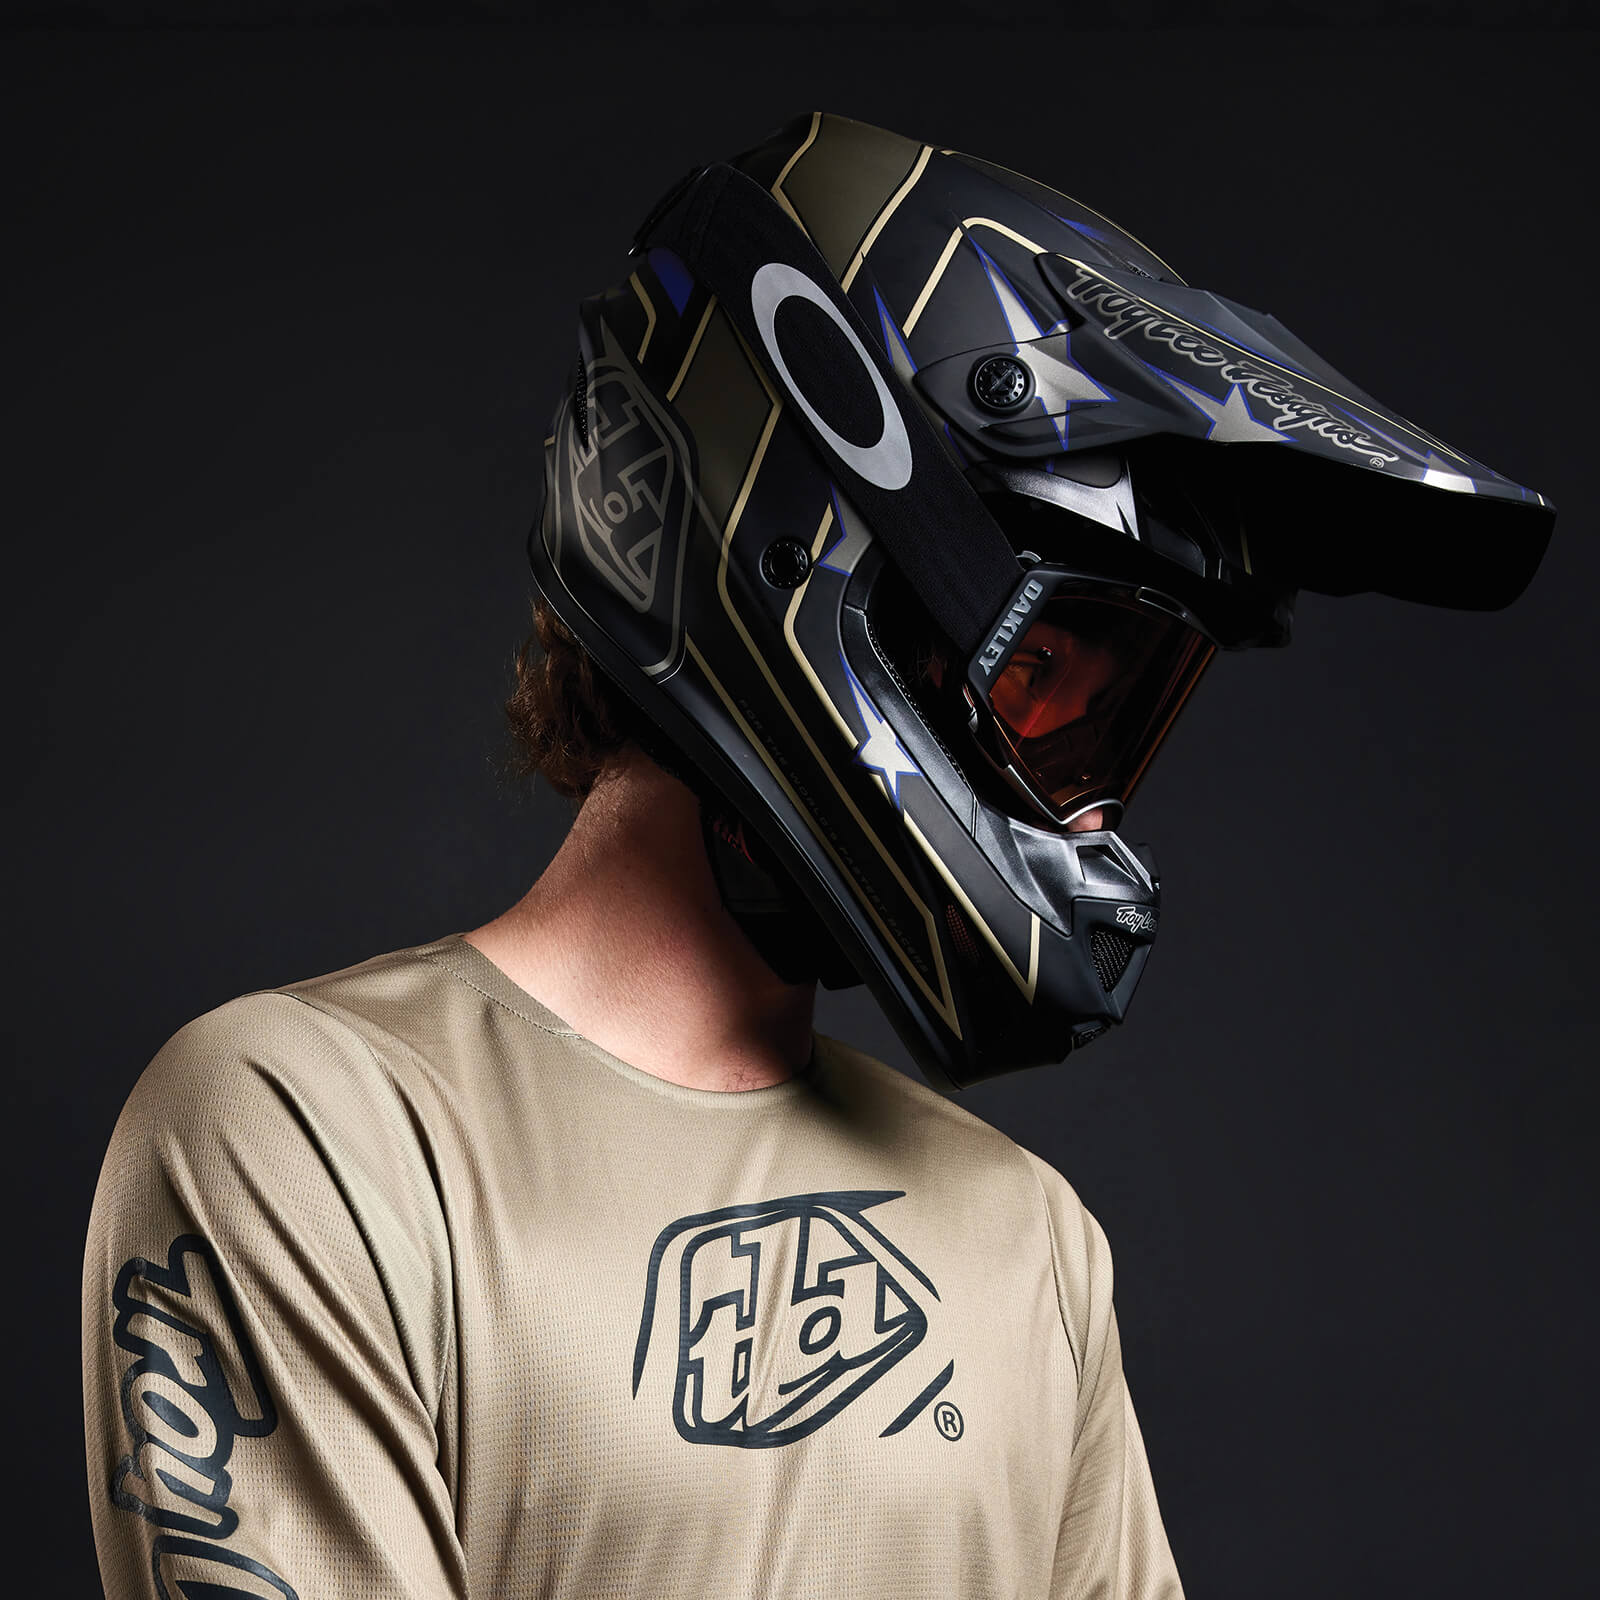 Troy Lee Designs SE4 Poly helmet on rider.